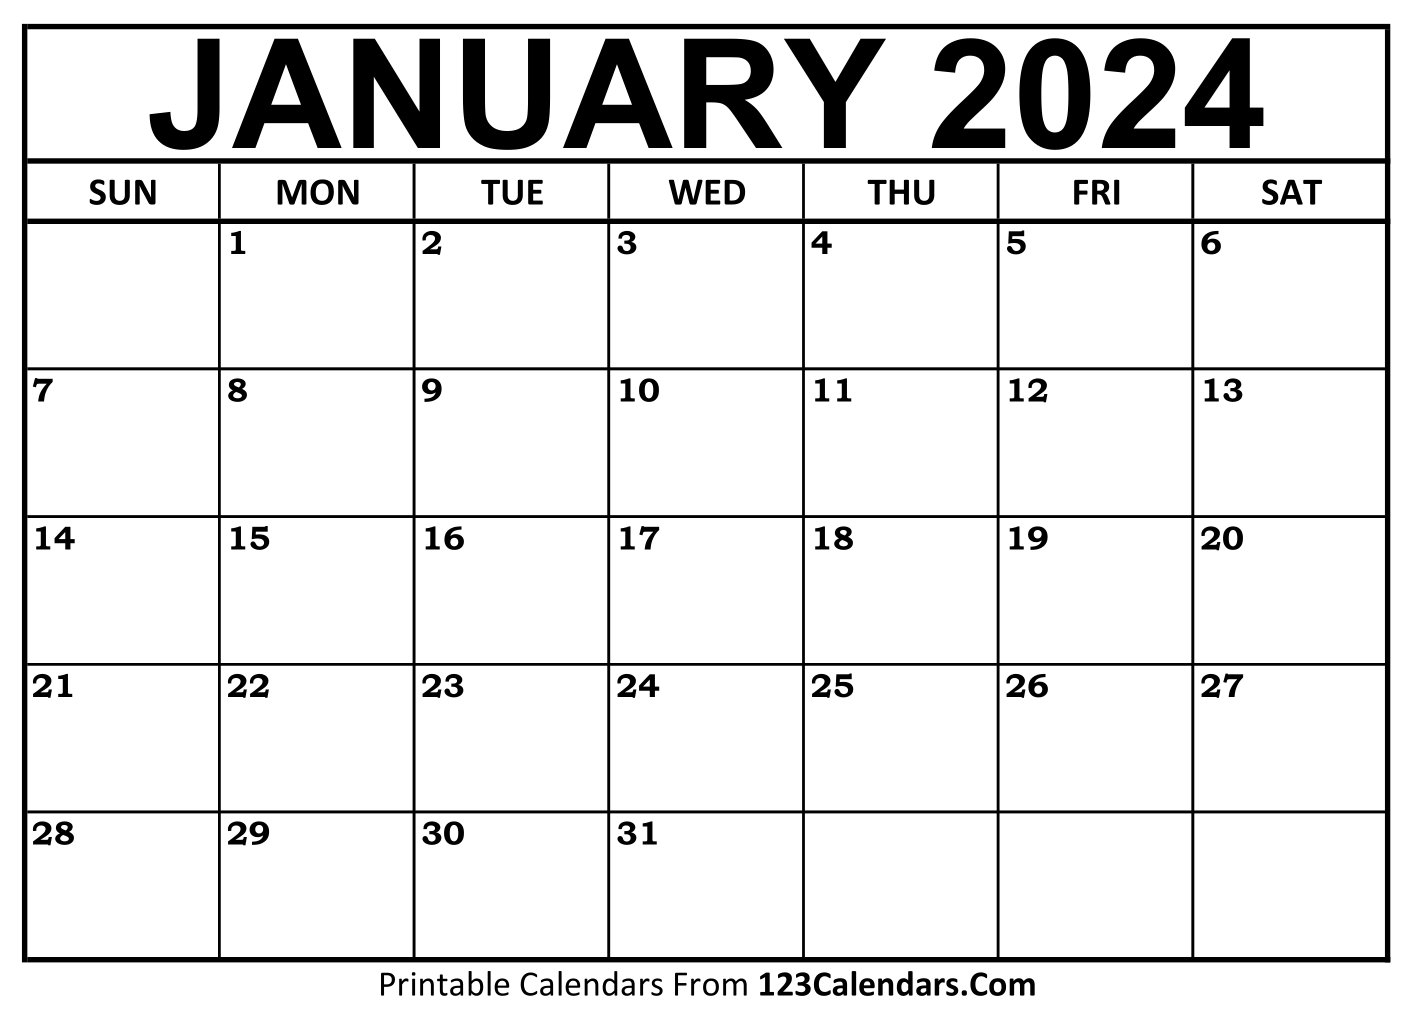 Printable January 2024 Calendar Templates - 123Calendars for Calendar Printable 2024 January